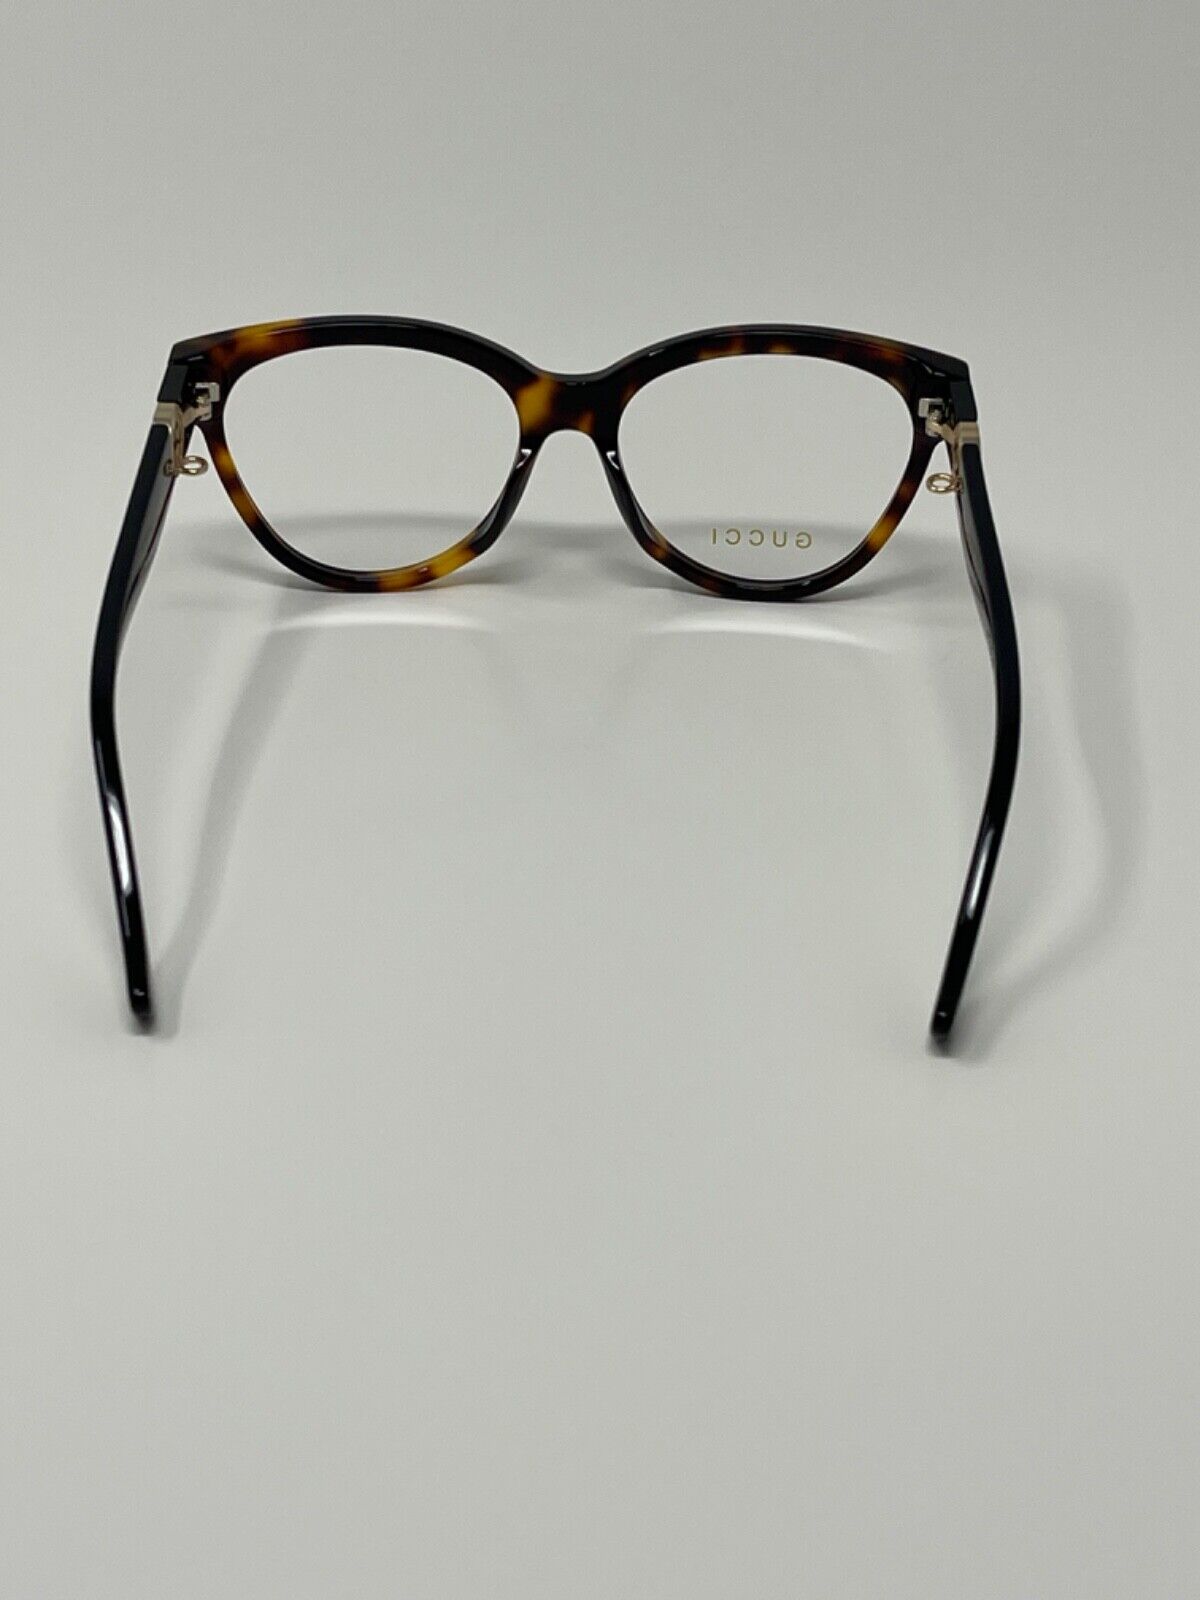 Stylish Gucci GG1024O Acetate Eyeglasses Tortoise & Golden Chain-Brand New!